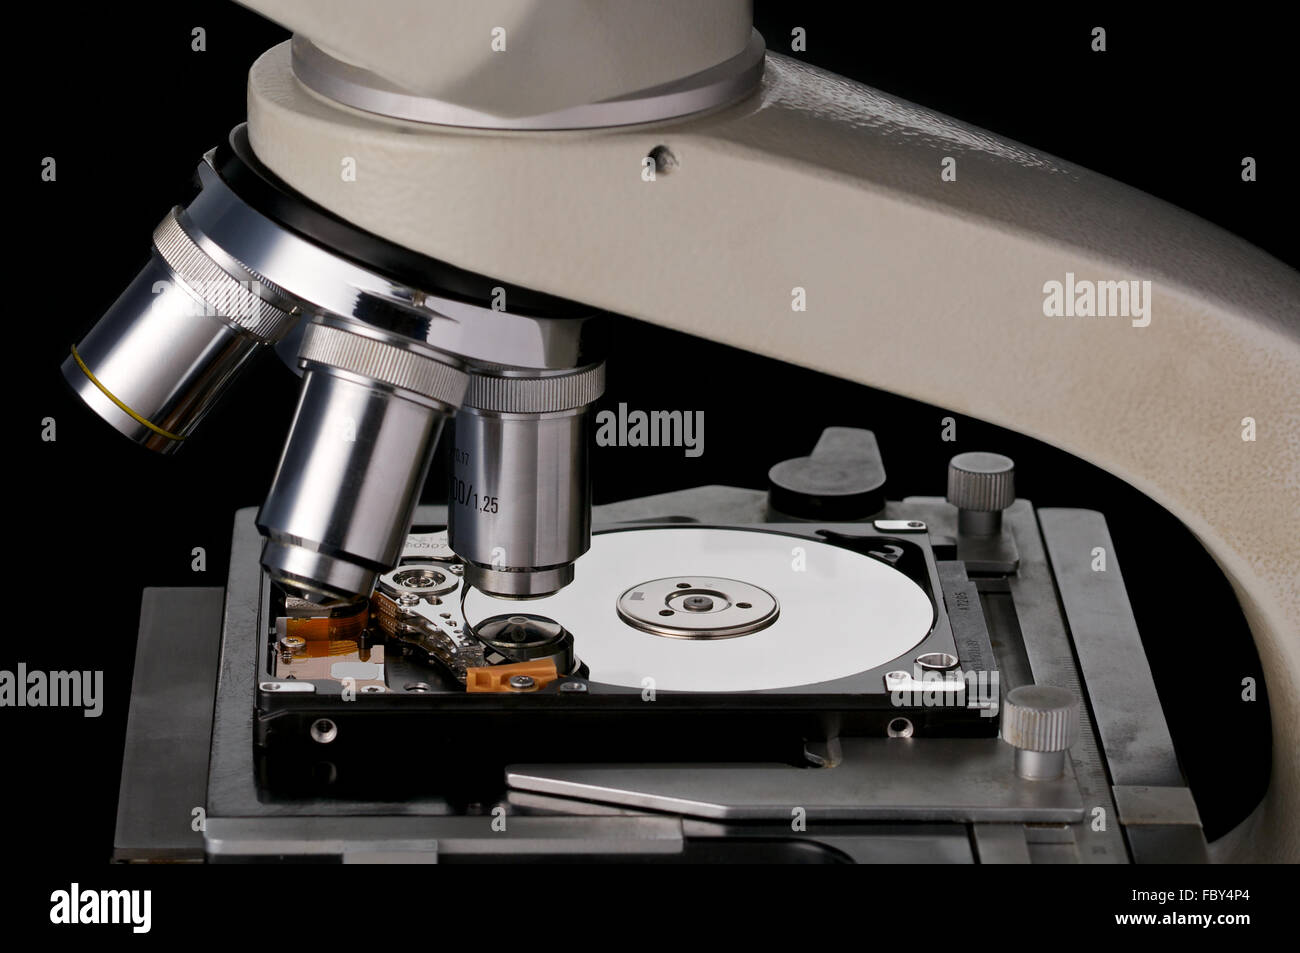 Festplatte unter dem Mikroskop Stockfoto